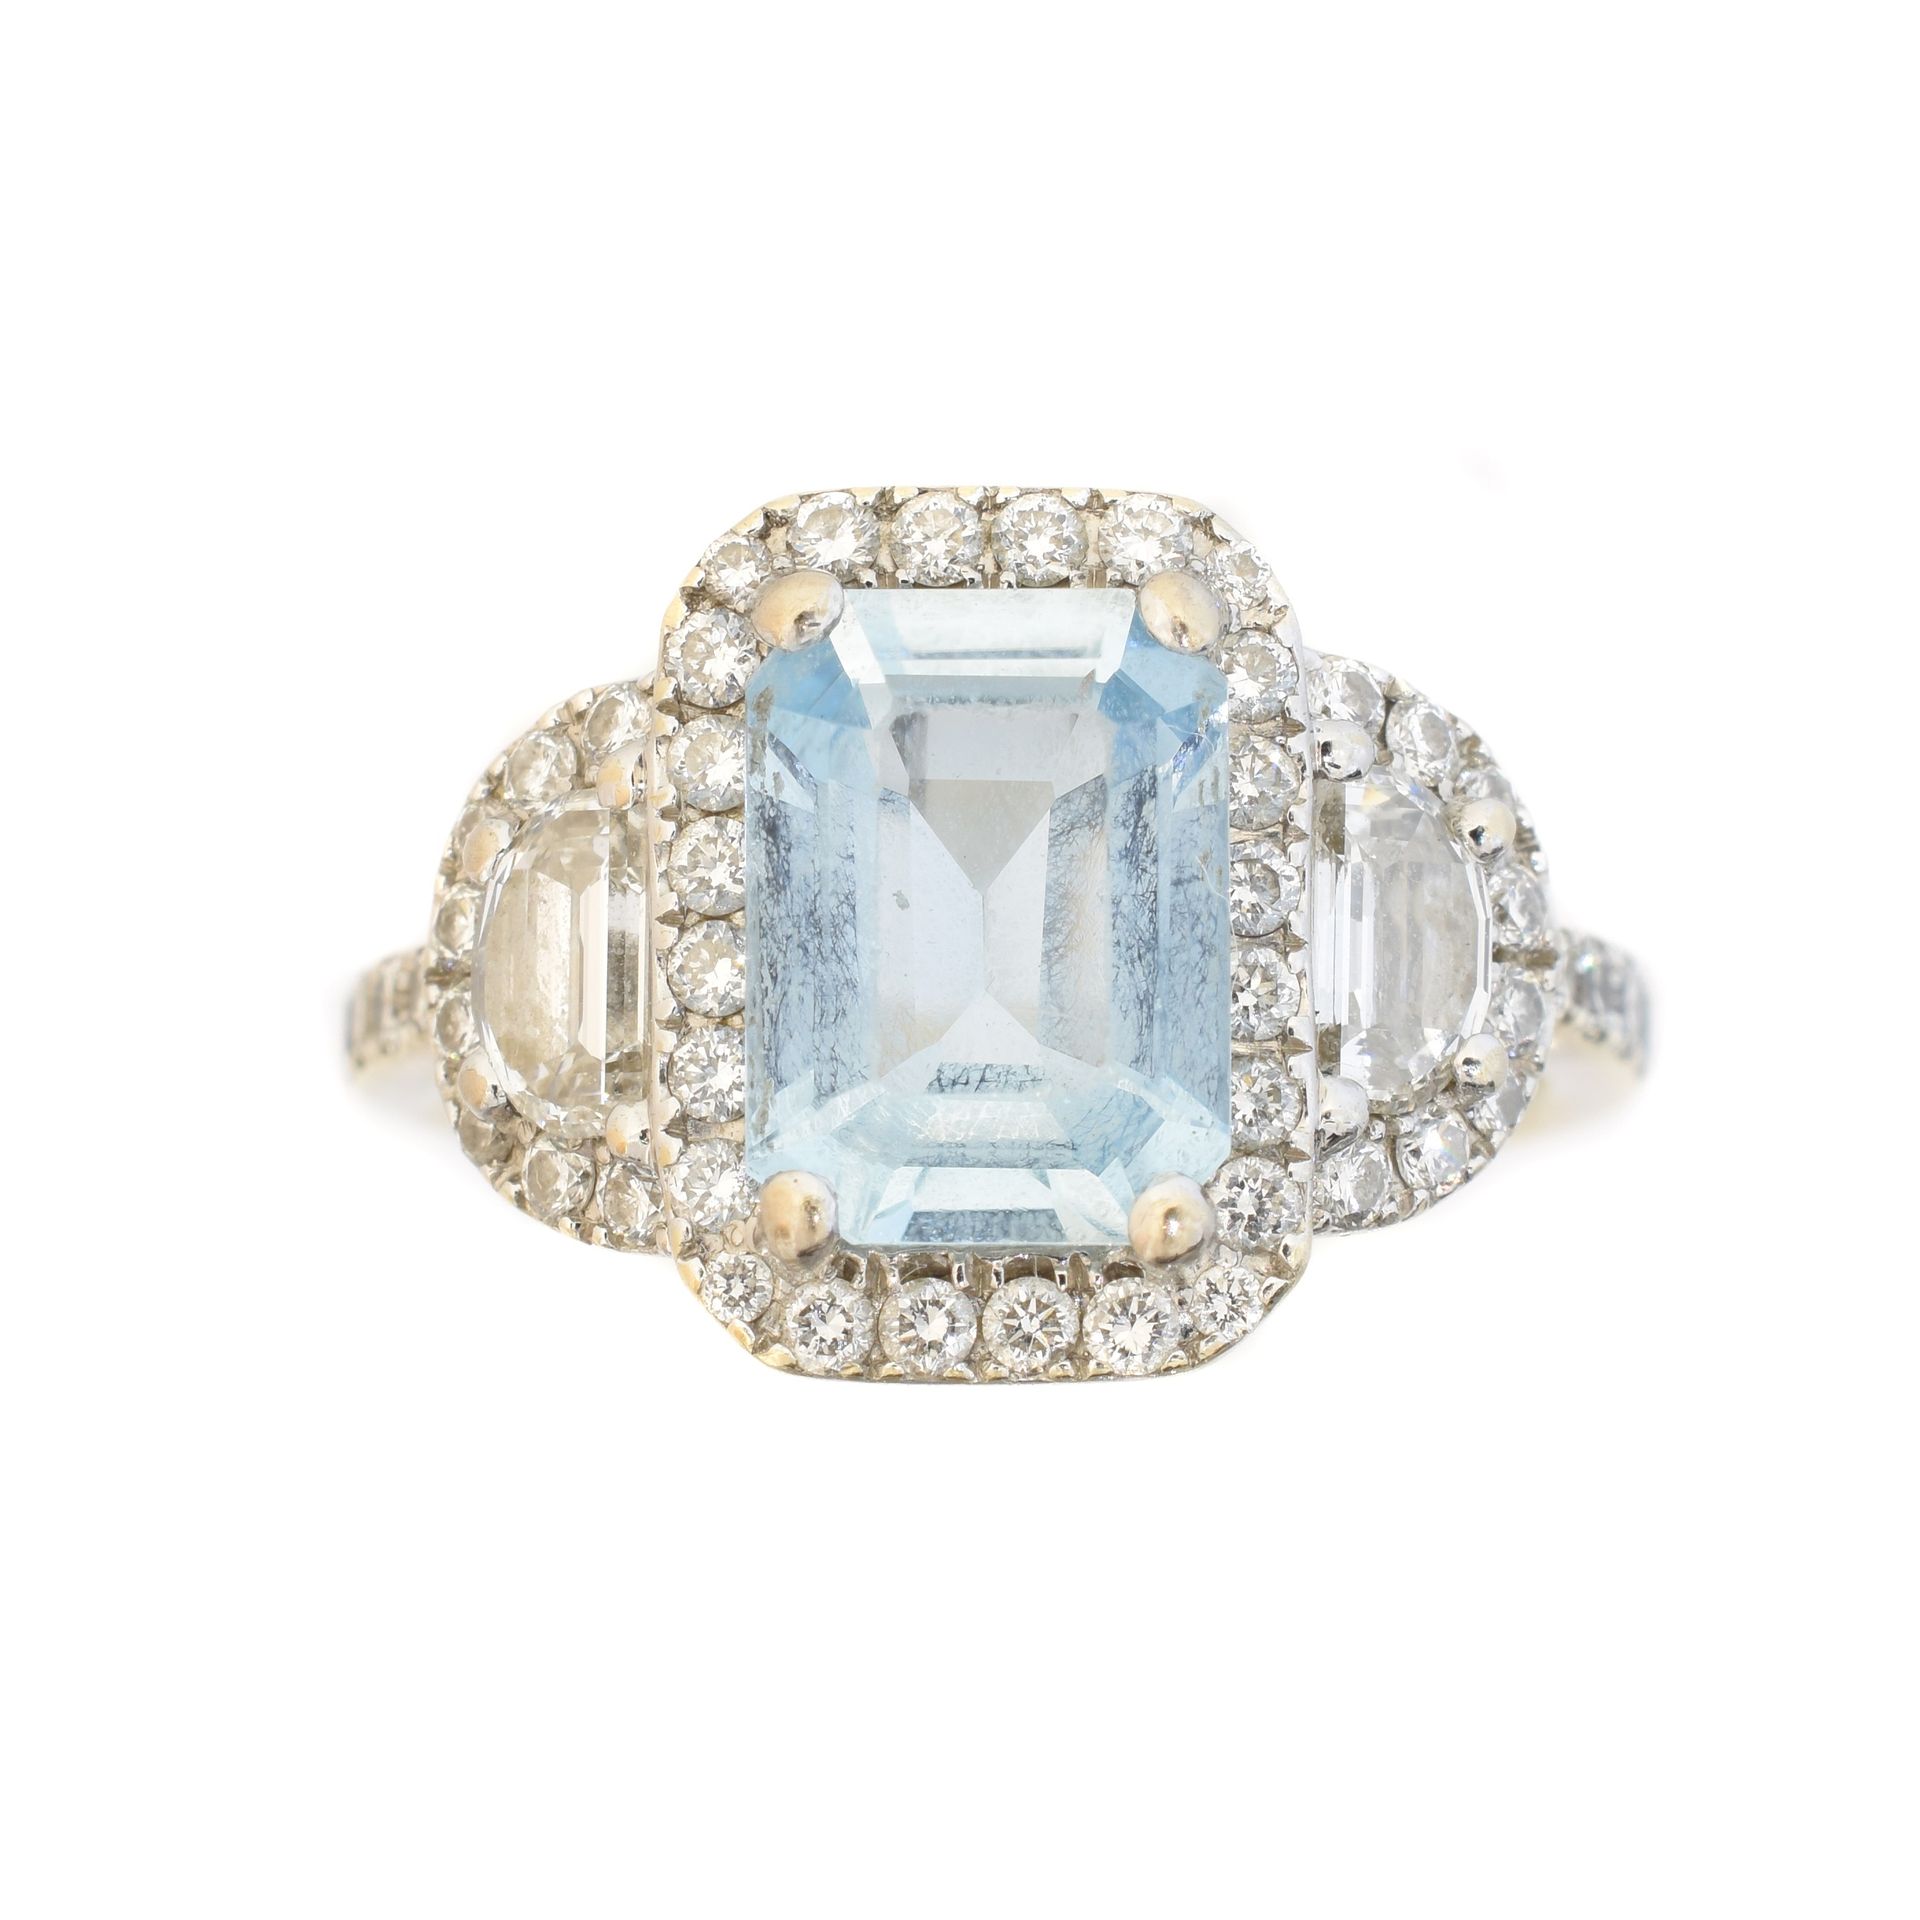 An aquamarine and diamond cluster ring, 
一枚海蓝宝石和钻石戒指， 长方形的海蓝宝石重约1.60克拉，周围是明亮式切割钻&hellip;